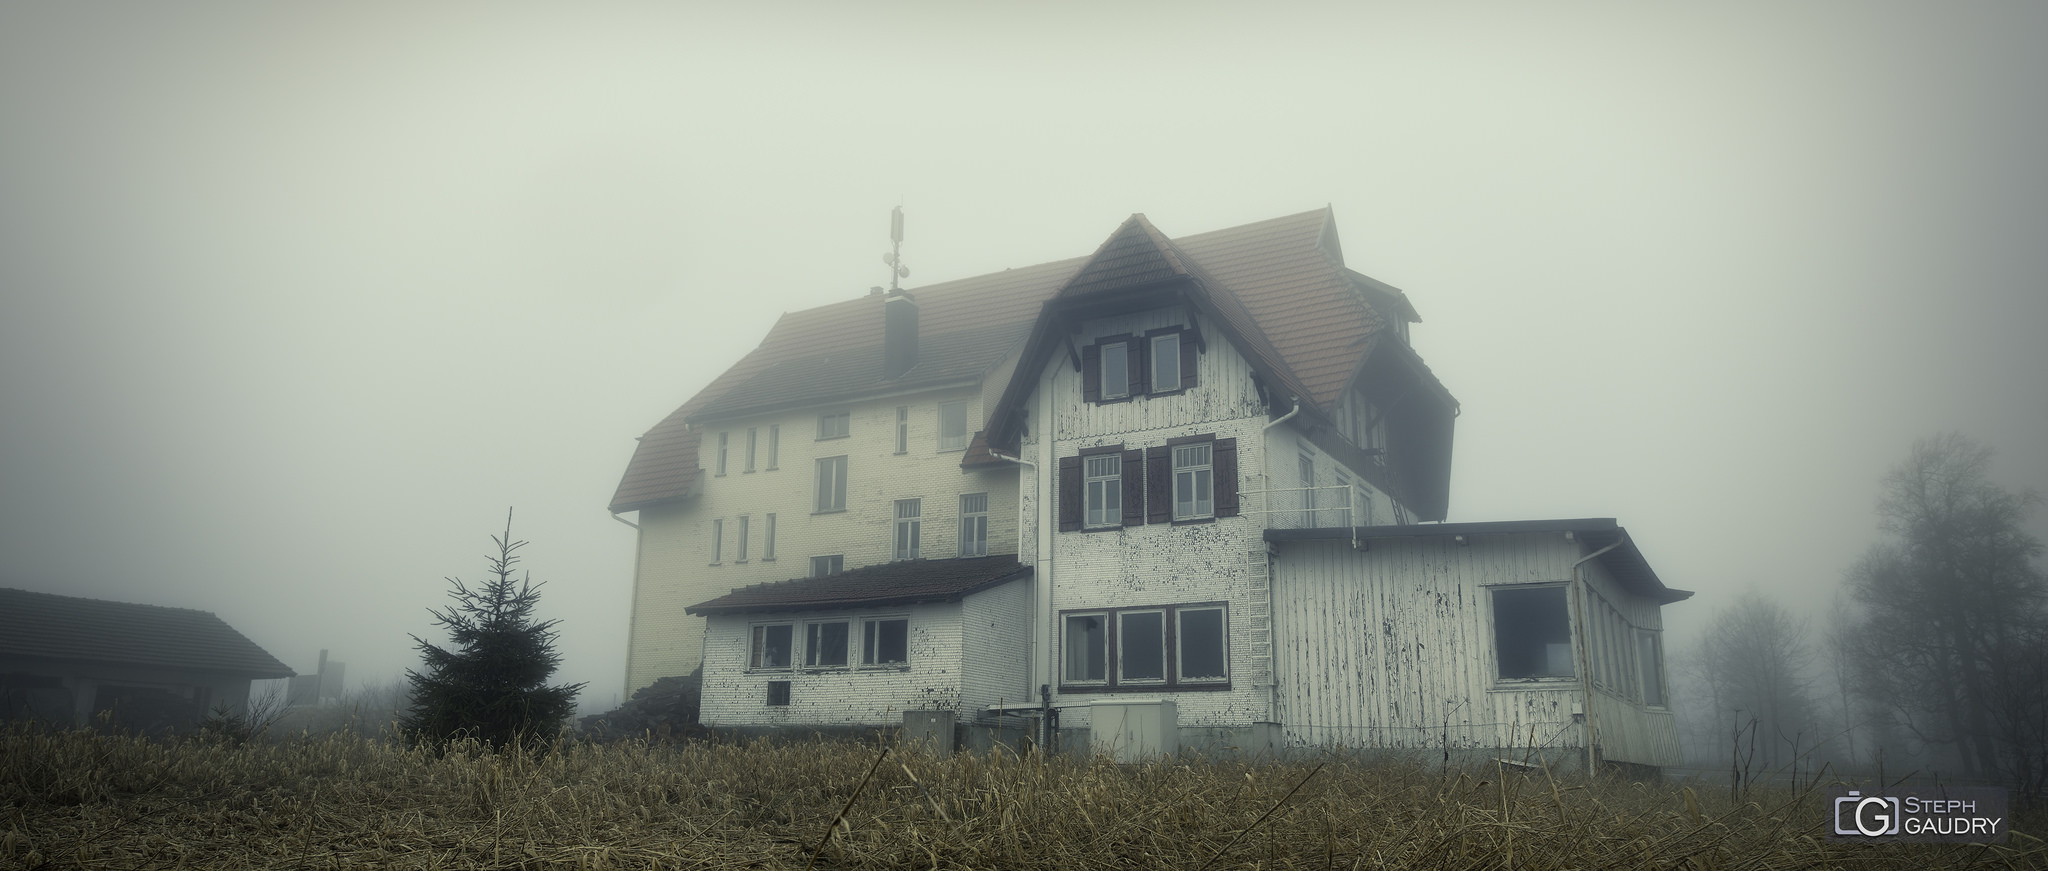 Haunted house in the mist [Klik om de diavoorstelling te starten]